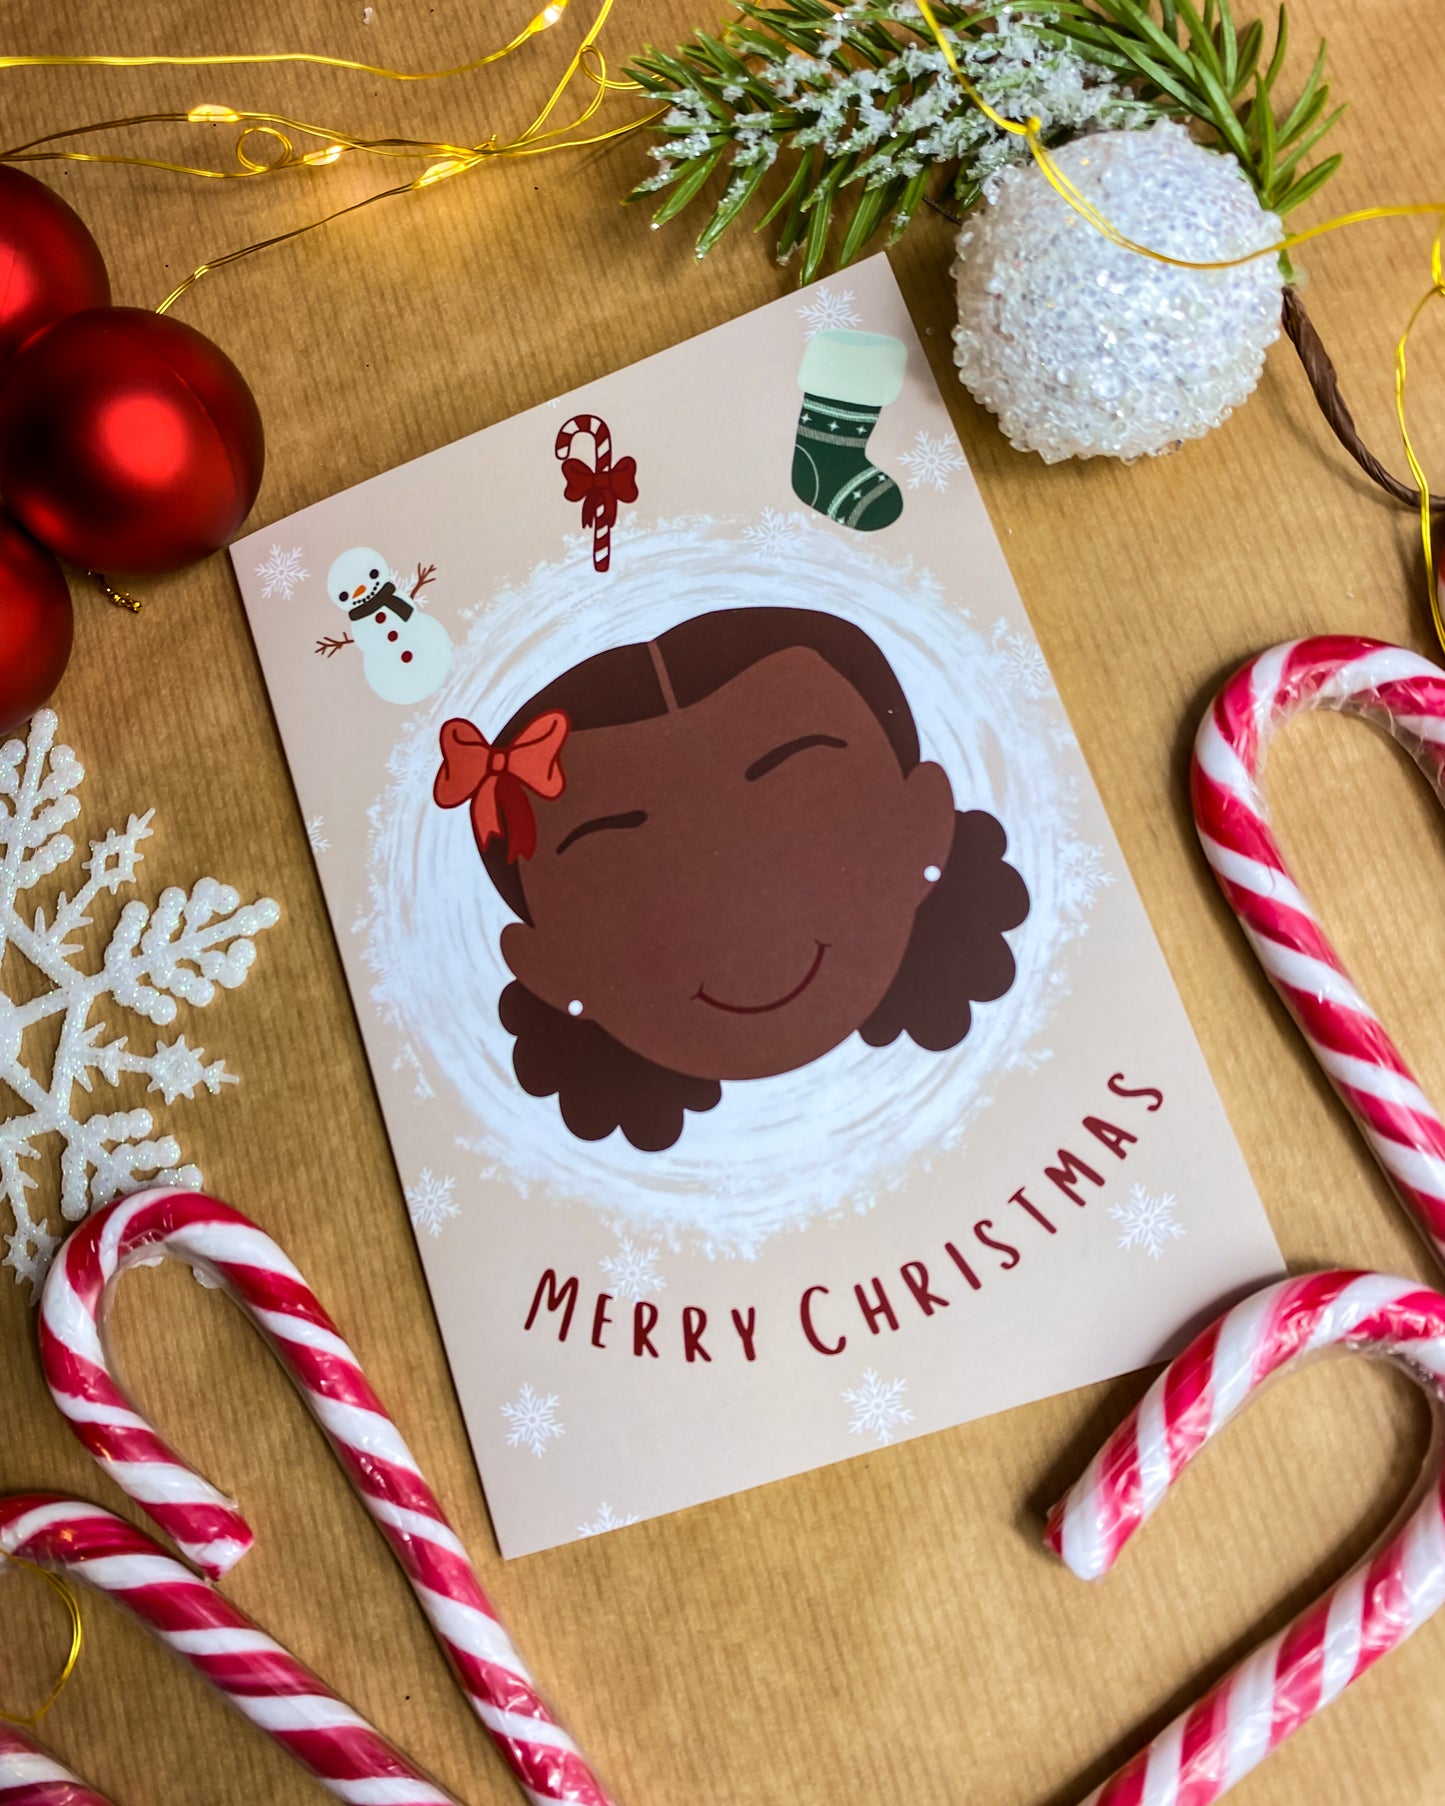 Black Girl Mini Christmas Card - Children's Seasons Greetings Holiday Card  Merry Christmas Card